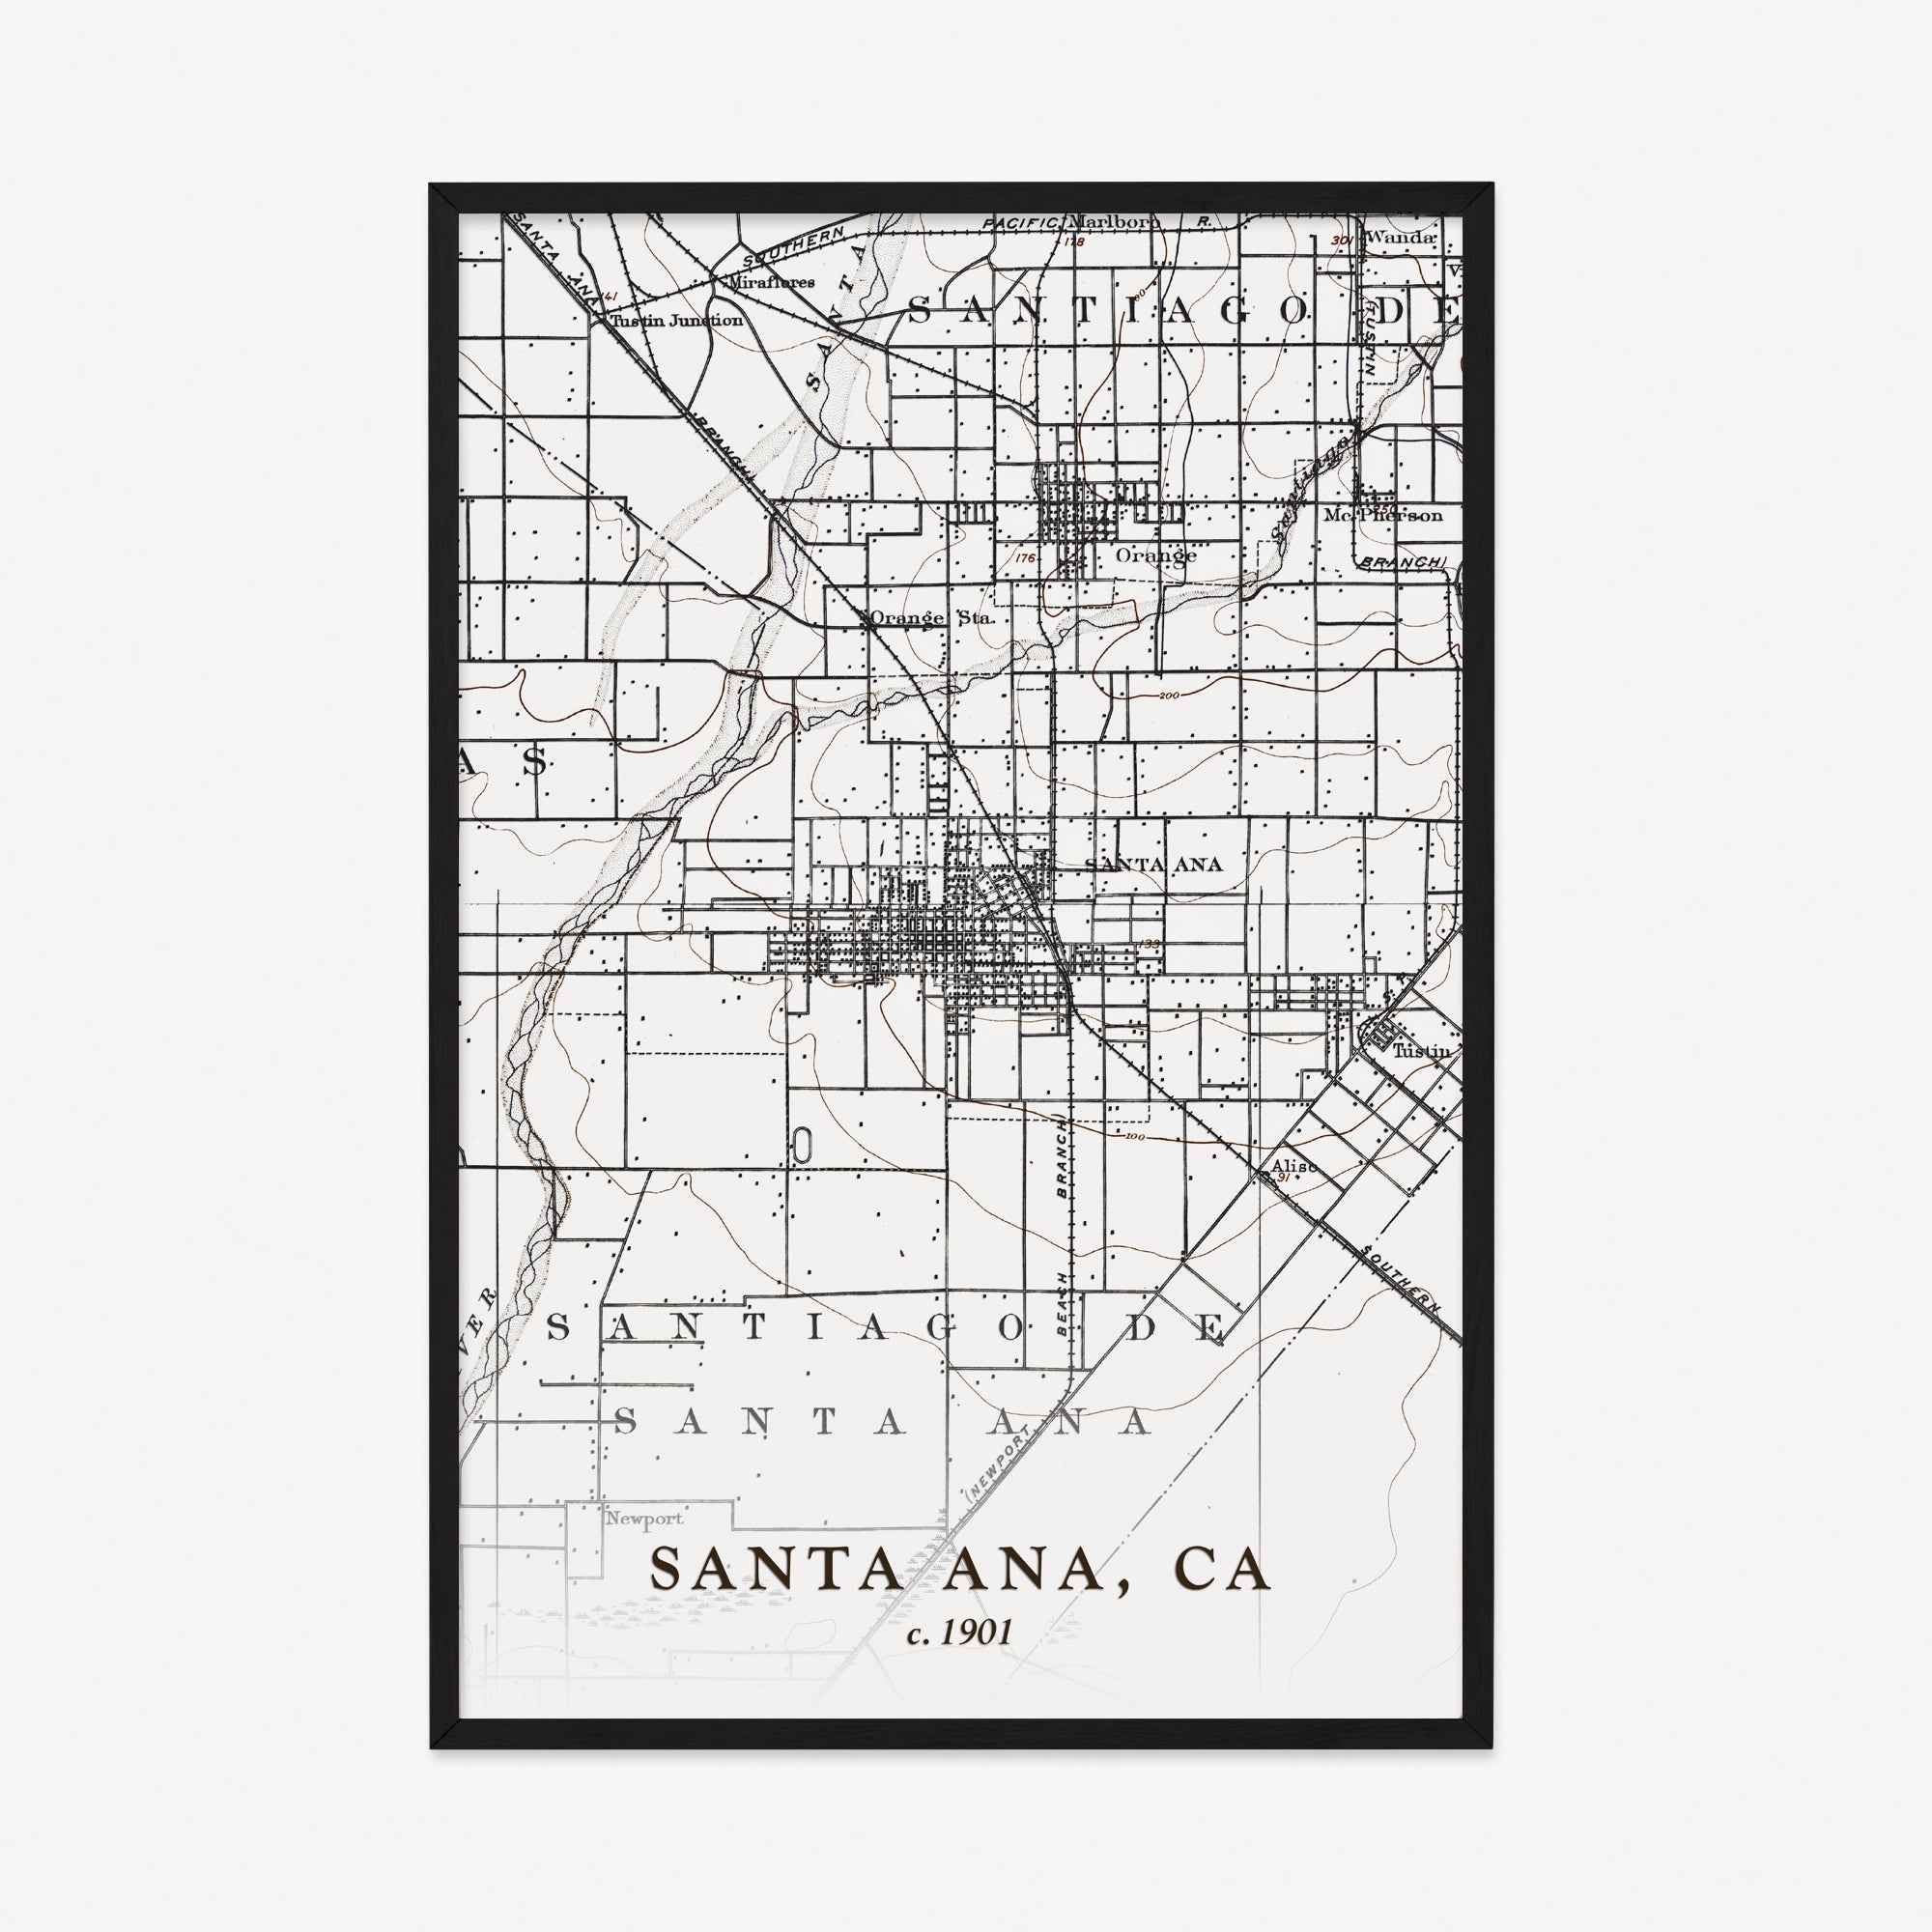 Santa Ana, CA - 1901 Topographic Map